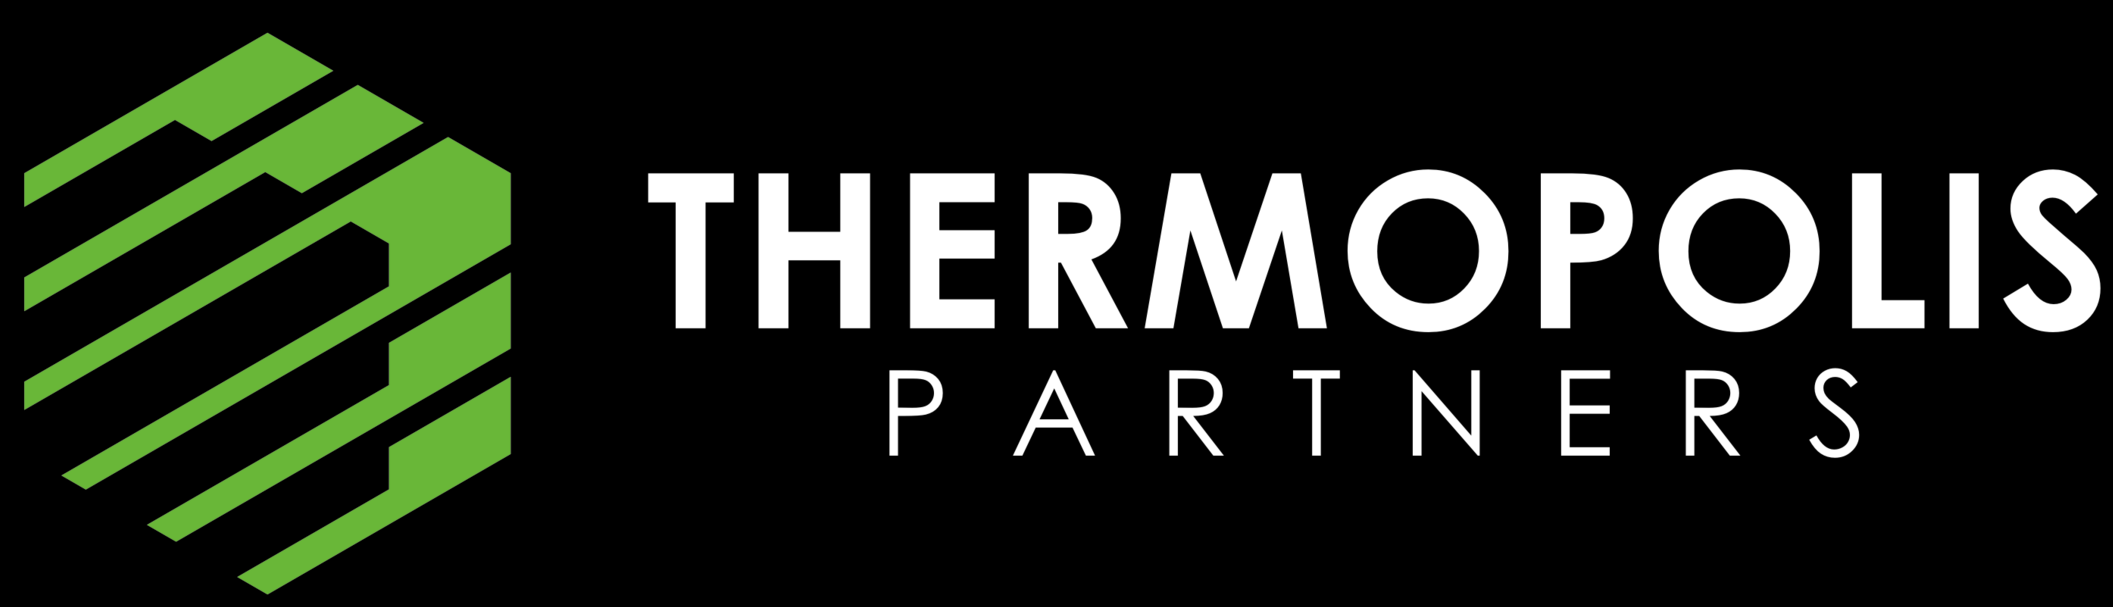 Thermopolis Partners